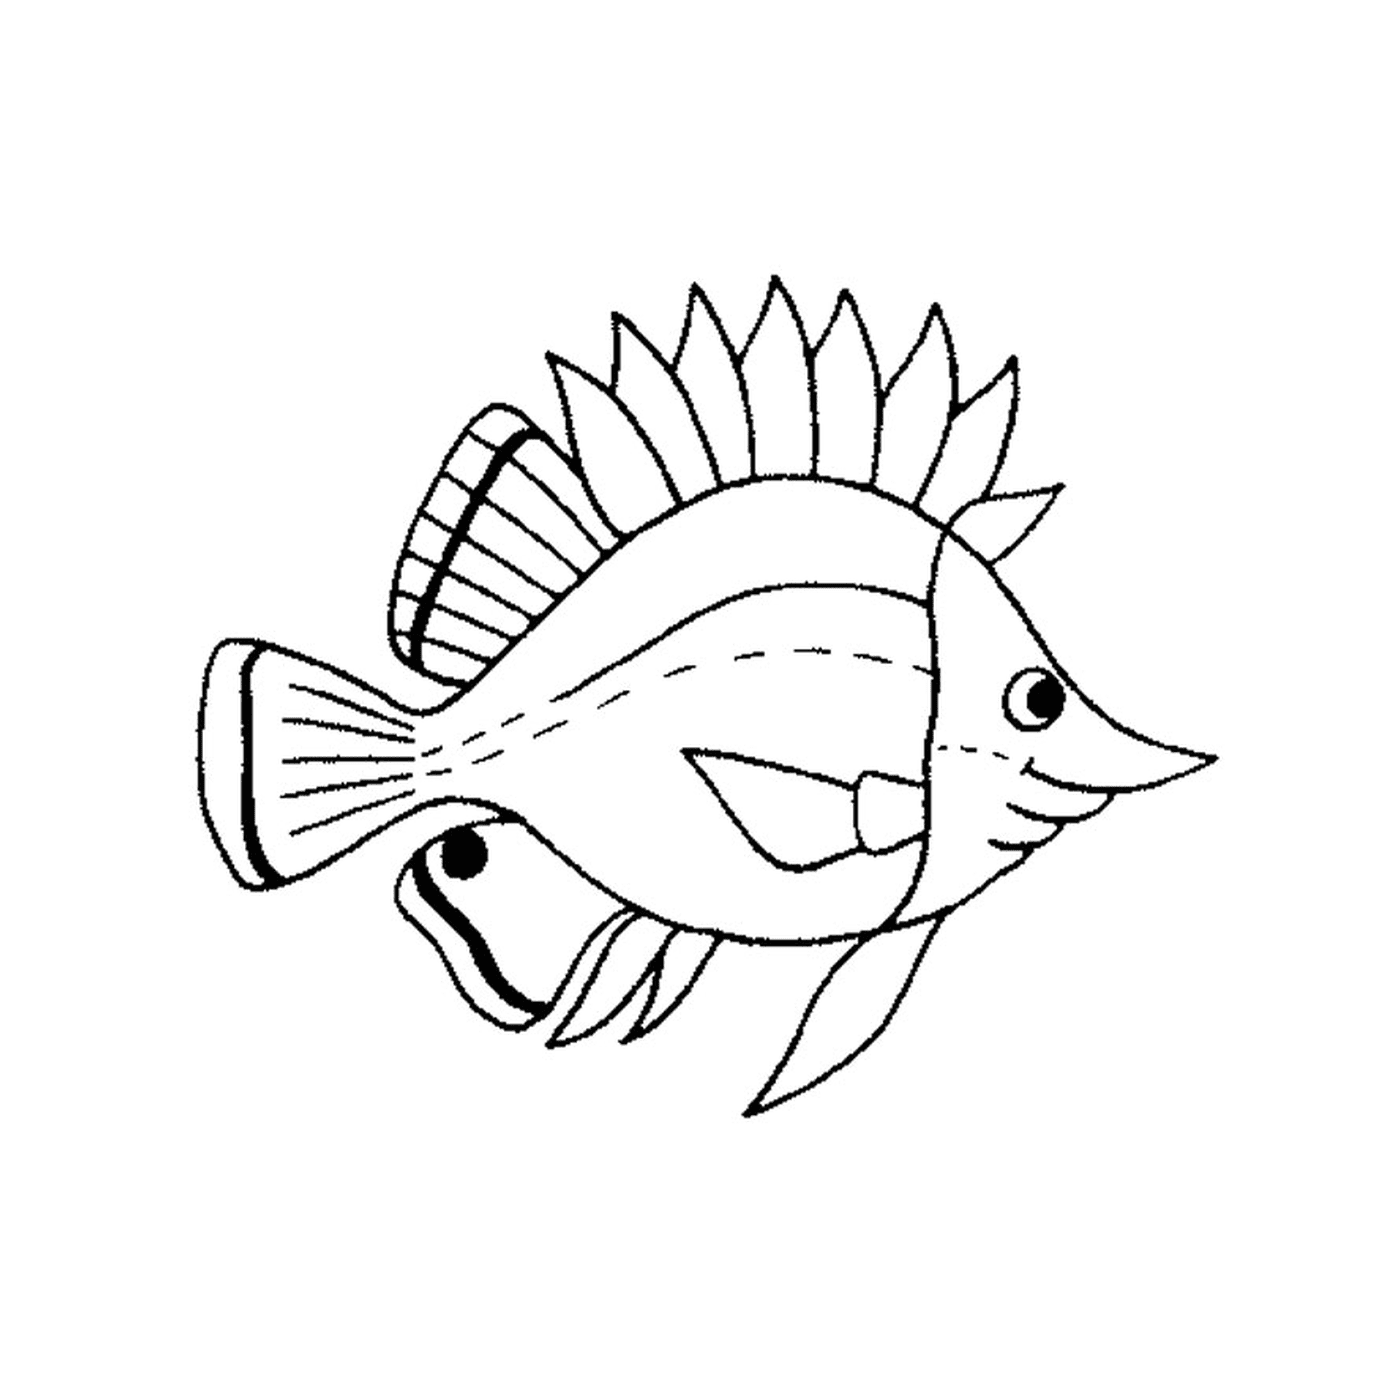  Sea fish 